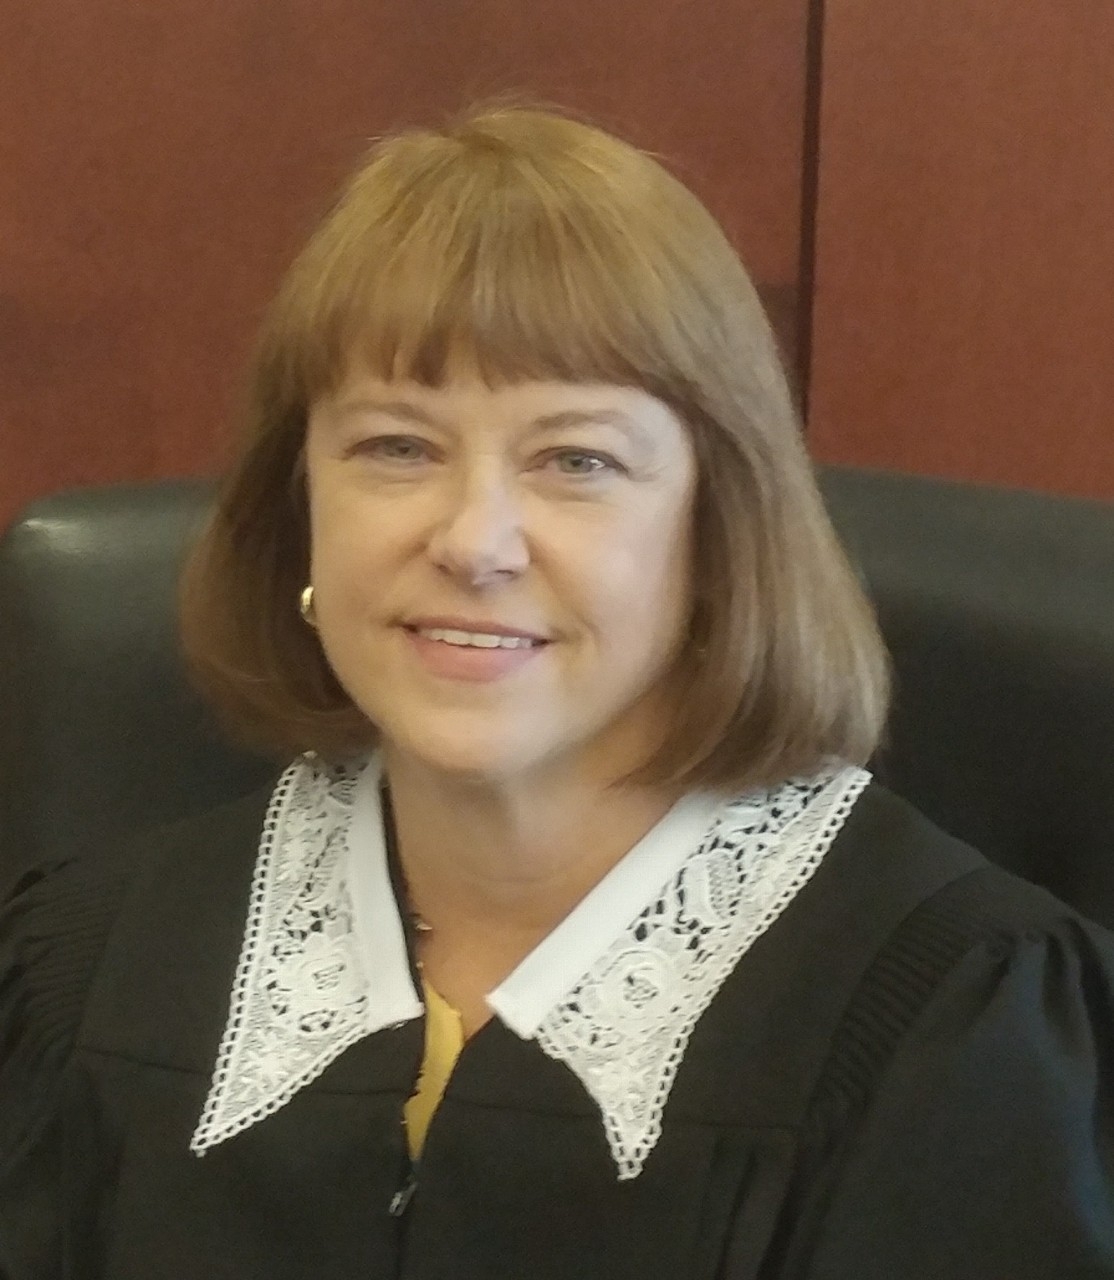 Judge Karen A. Thomas